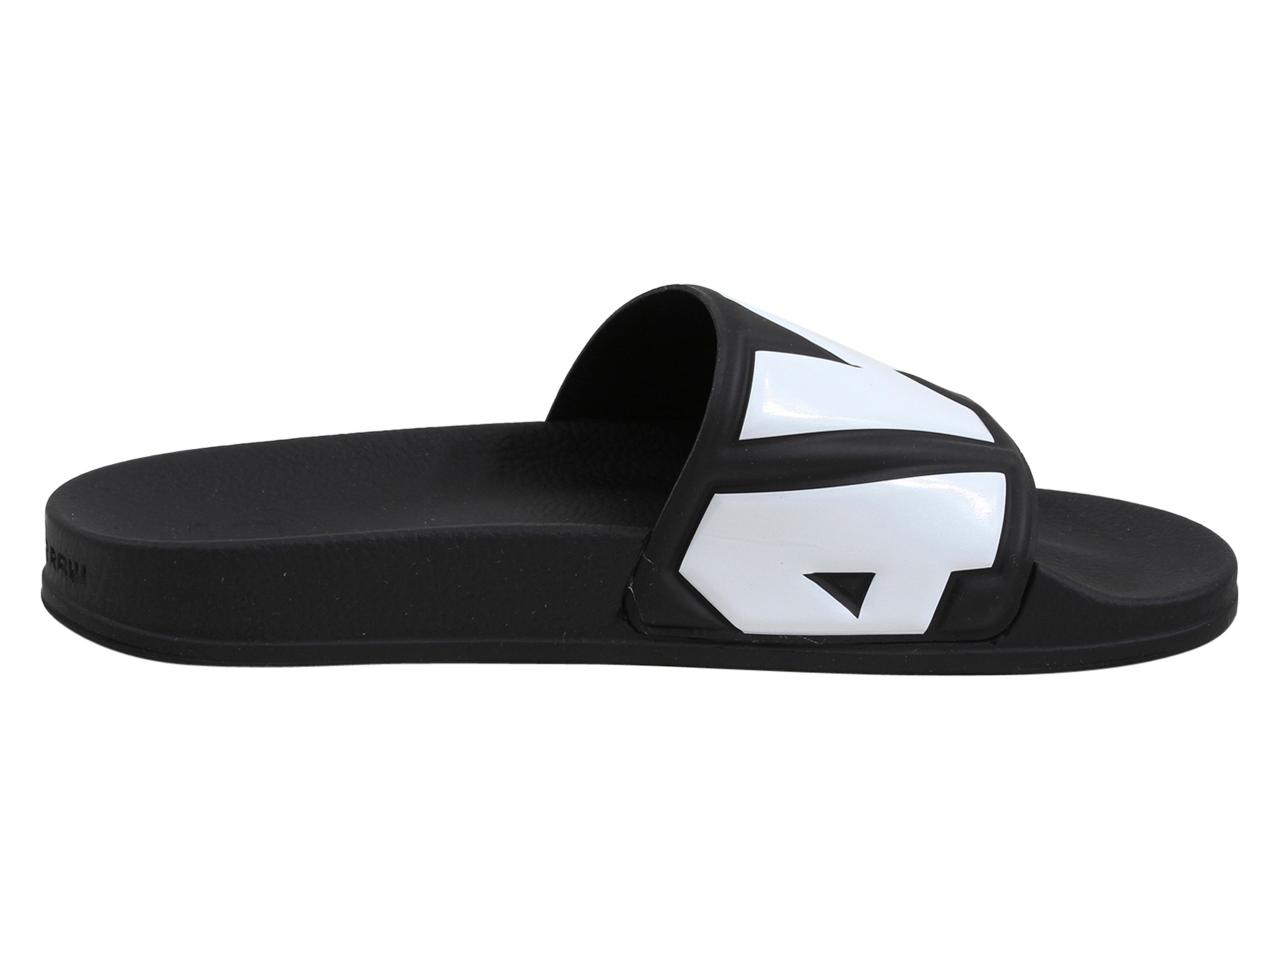 G-Star Raw Men's Cart-Slide-II Slides Sandals Shoes | eBay